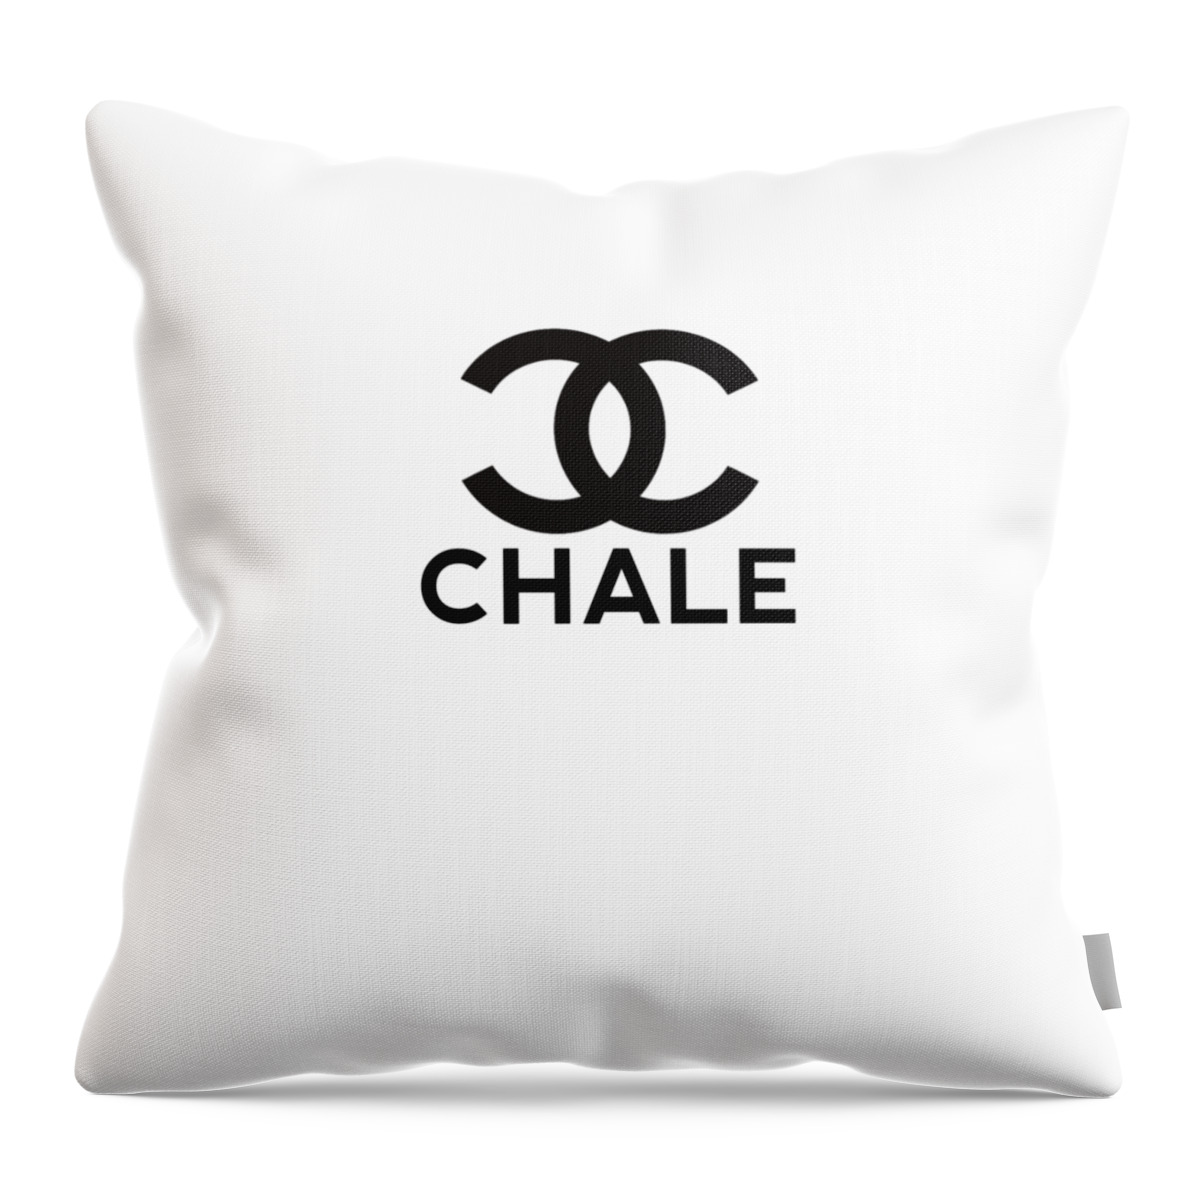 Chanel Throw Pillow 